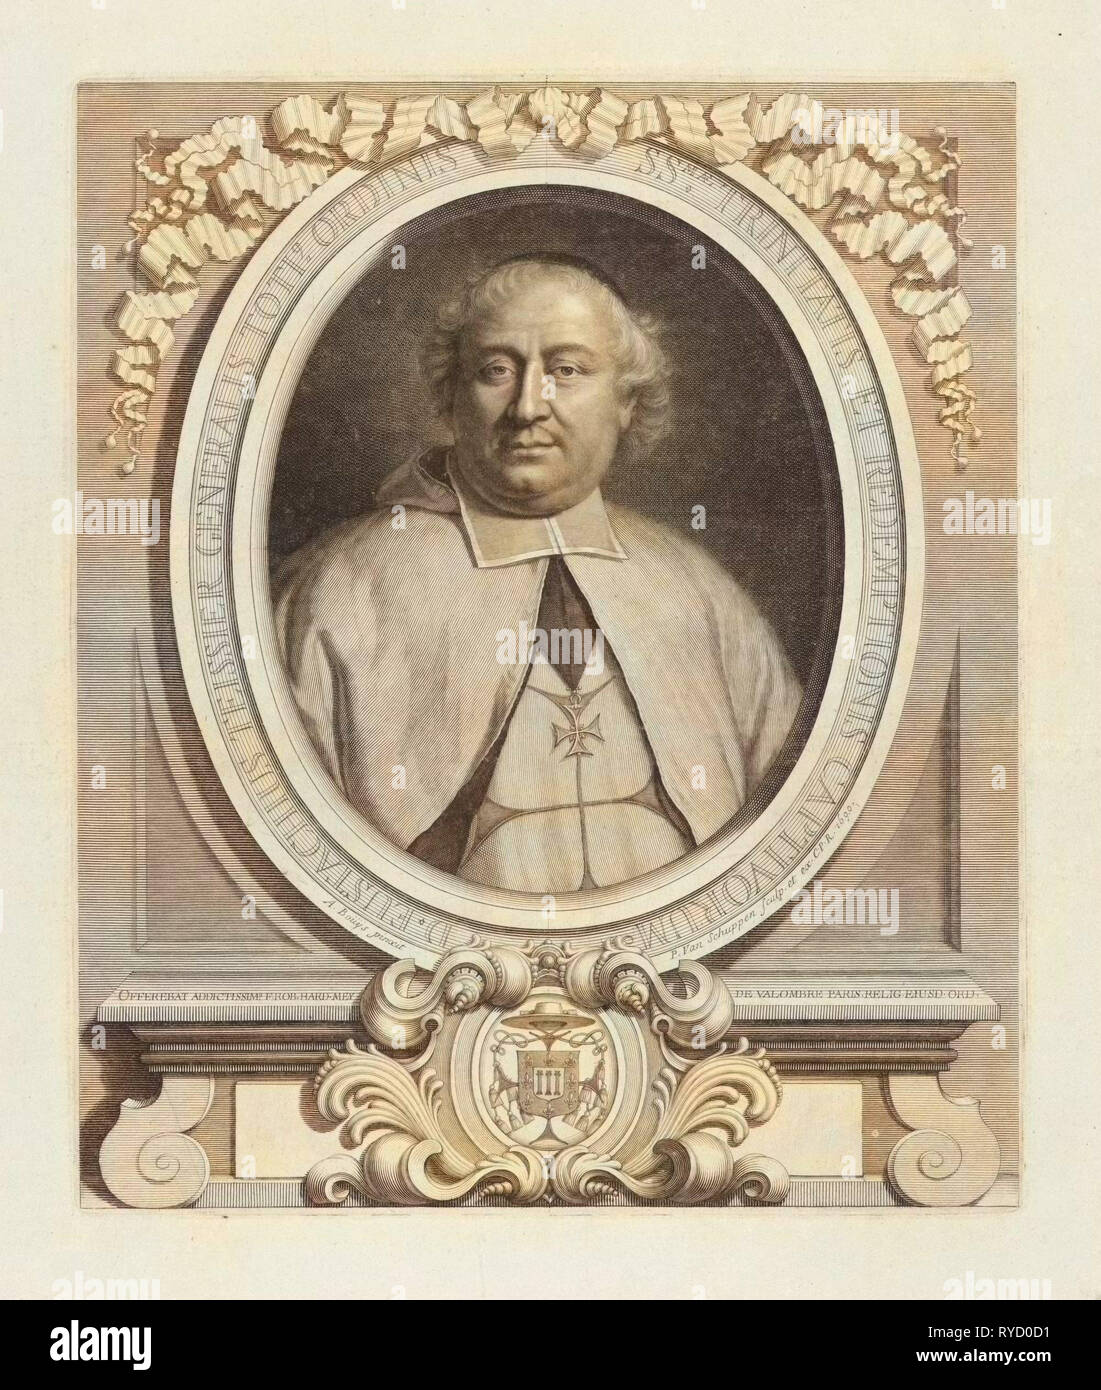 Portrait of Eustache Teissier, master general of the Order of Trinitarians, Pieter van Schuppen, 1690 Stock Photo